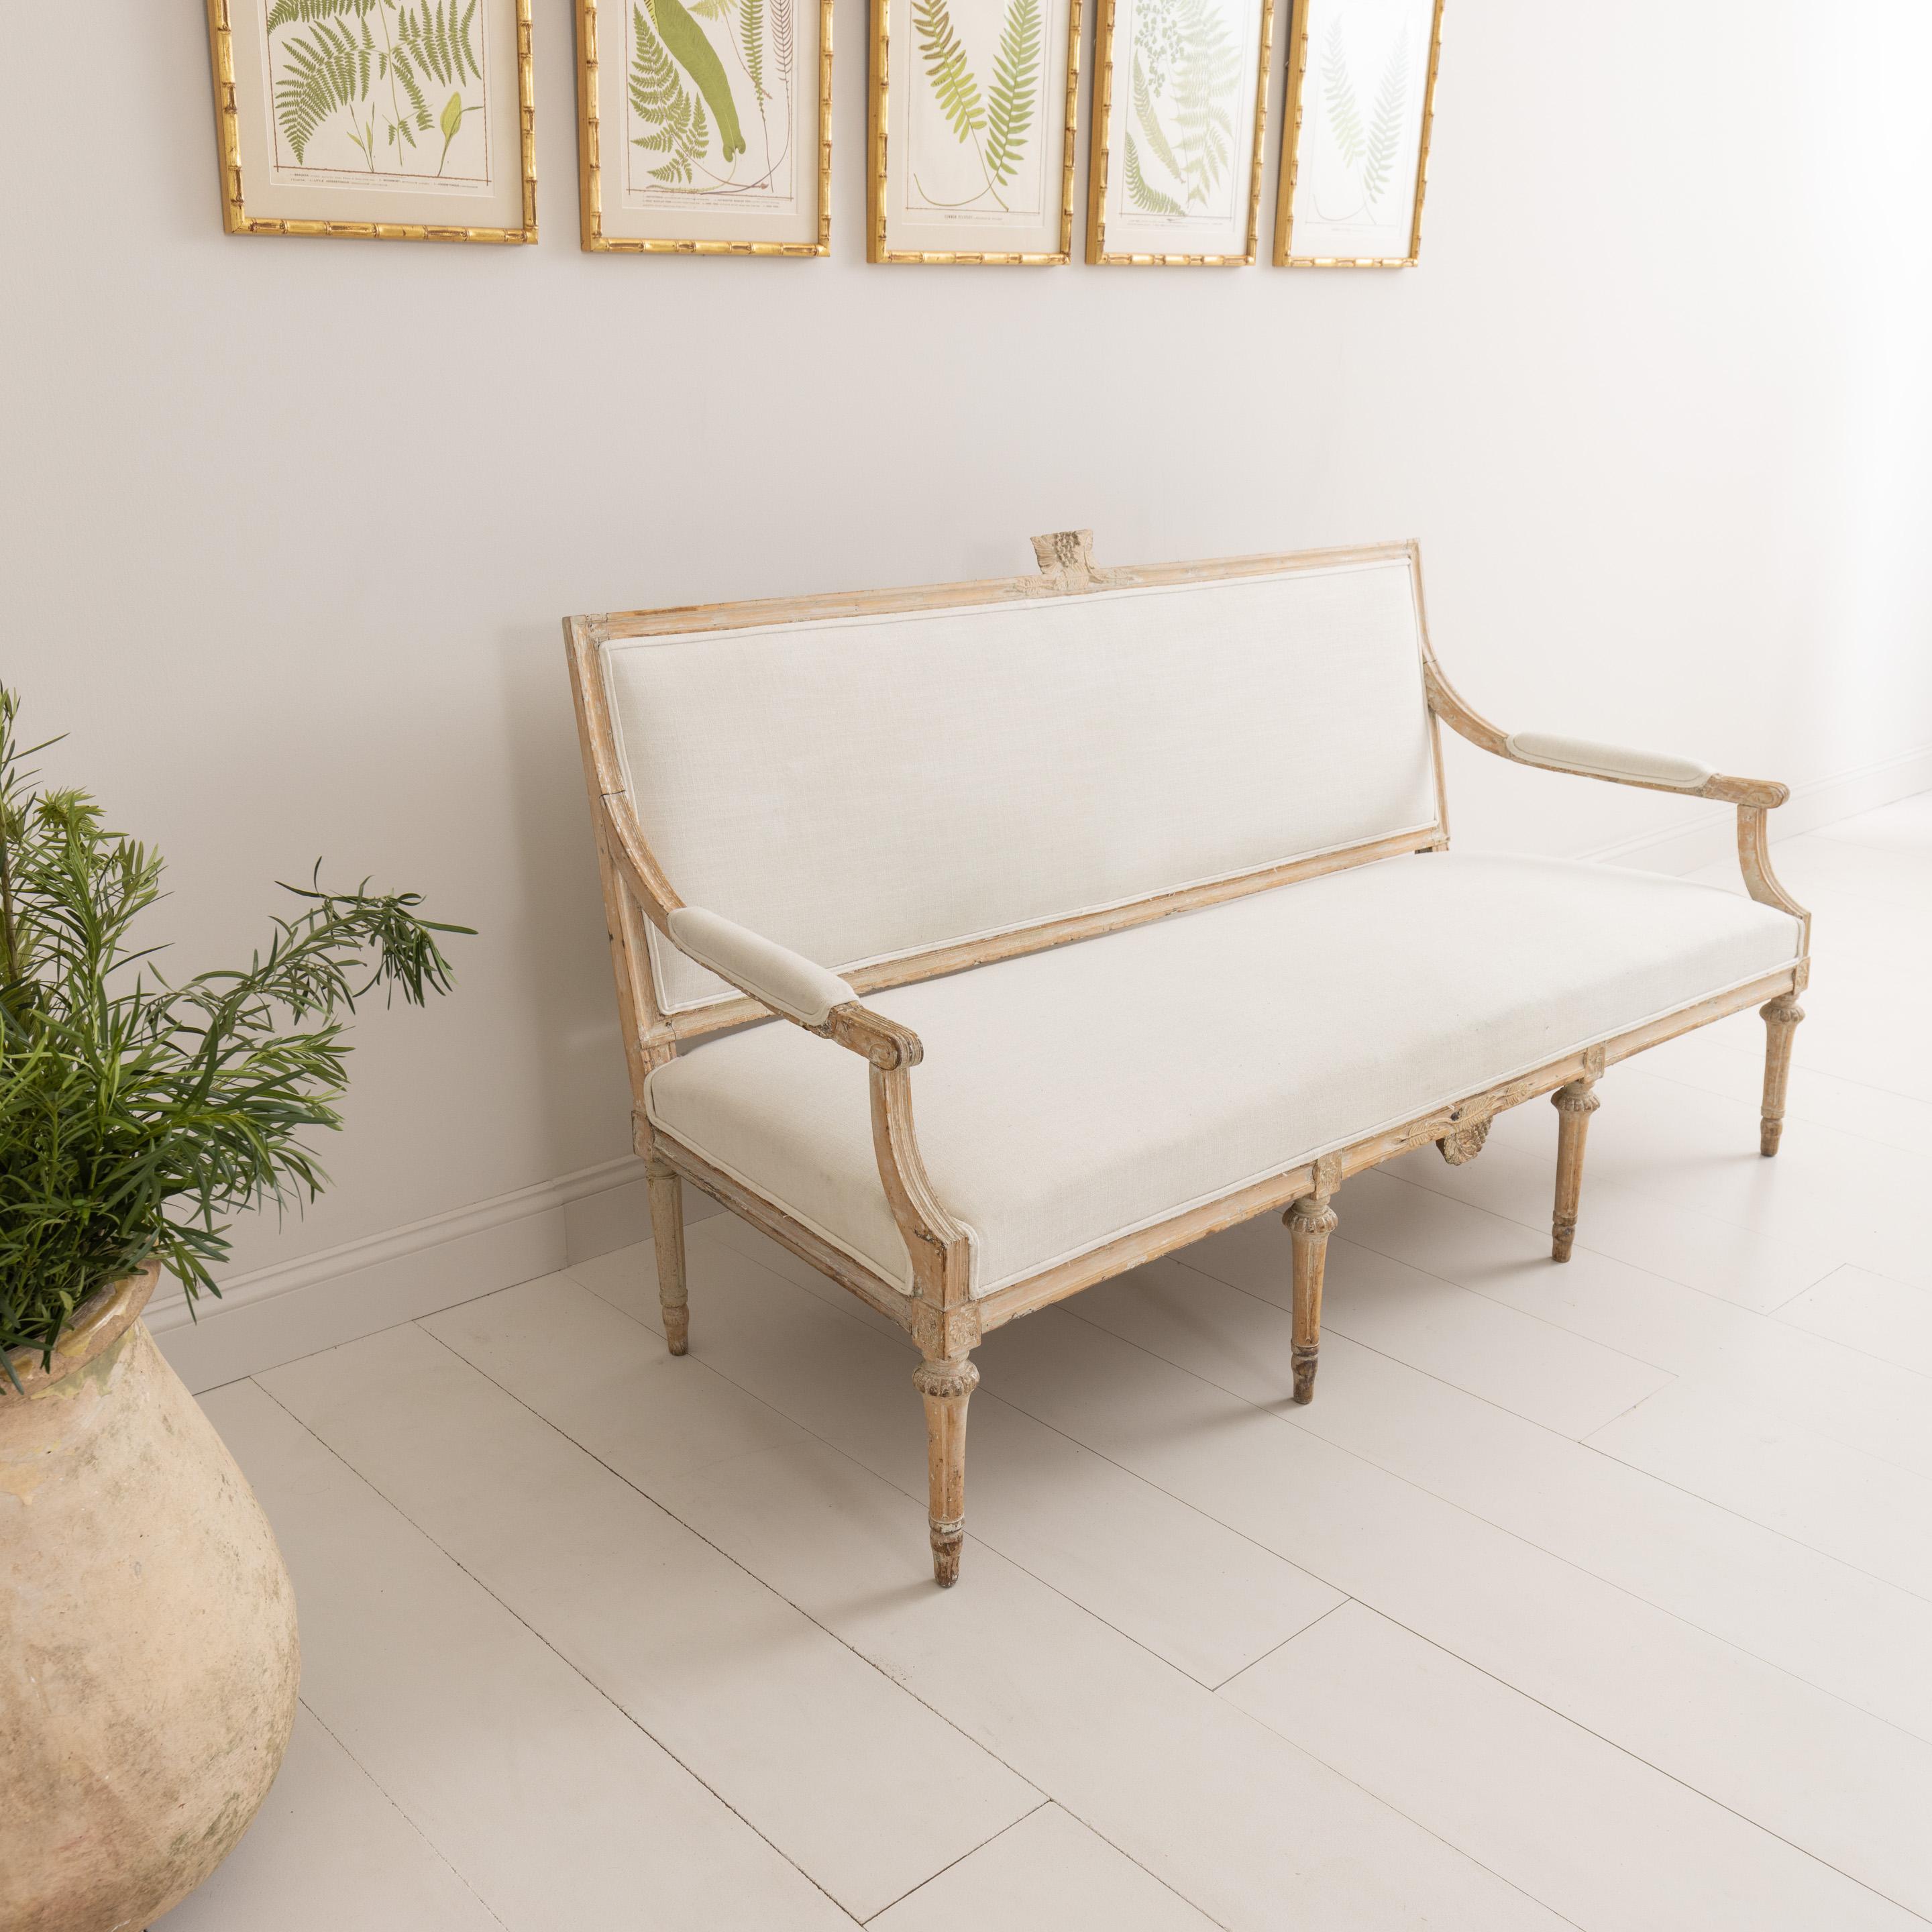 18th c. Swedish Sofa Bench in Original Patina, Gustavian Period In Excellent Condition For Sale In Wichita, KS